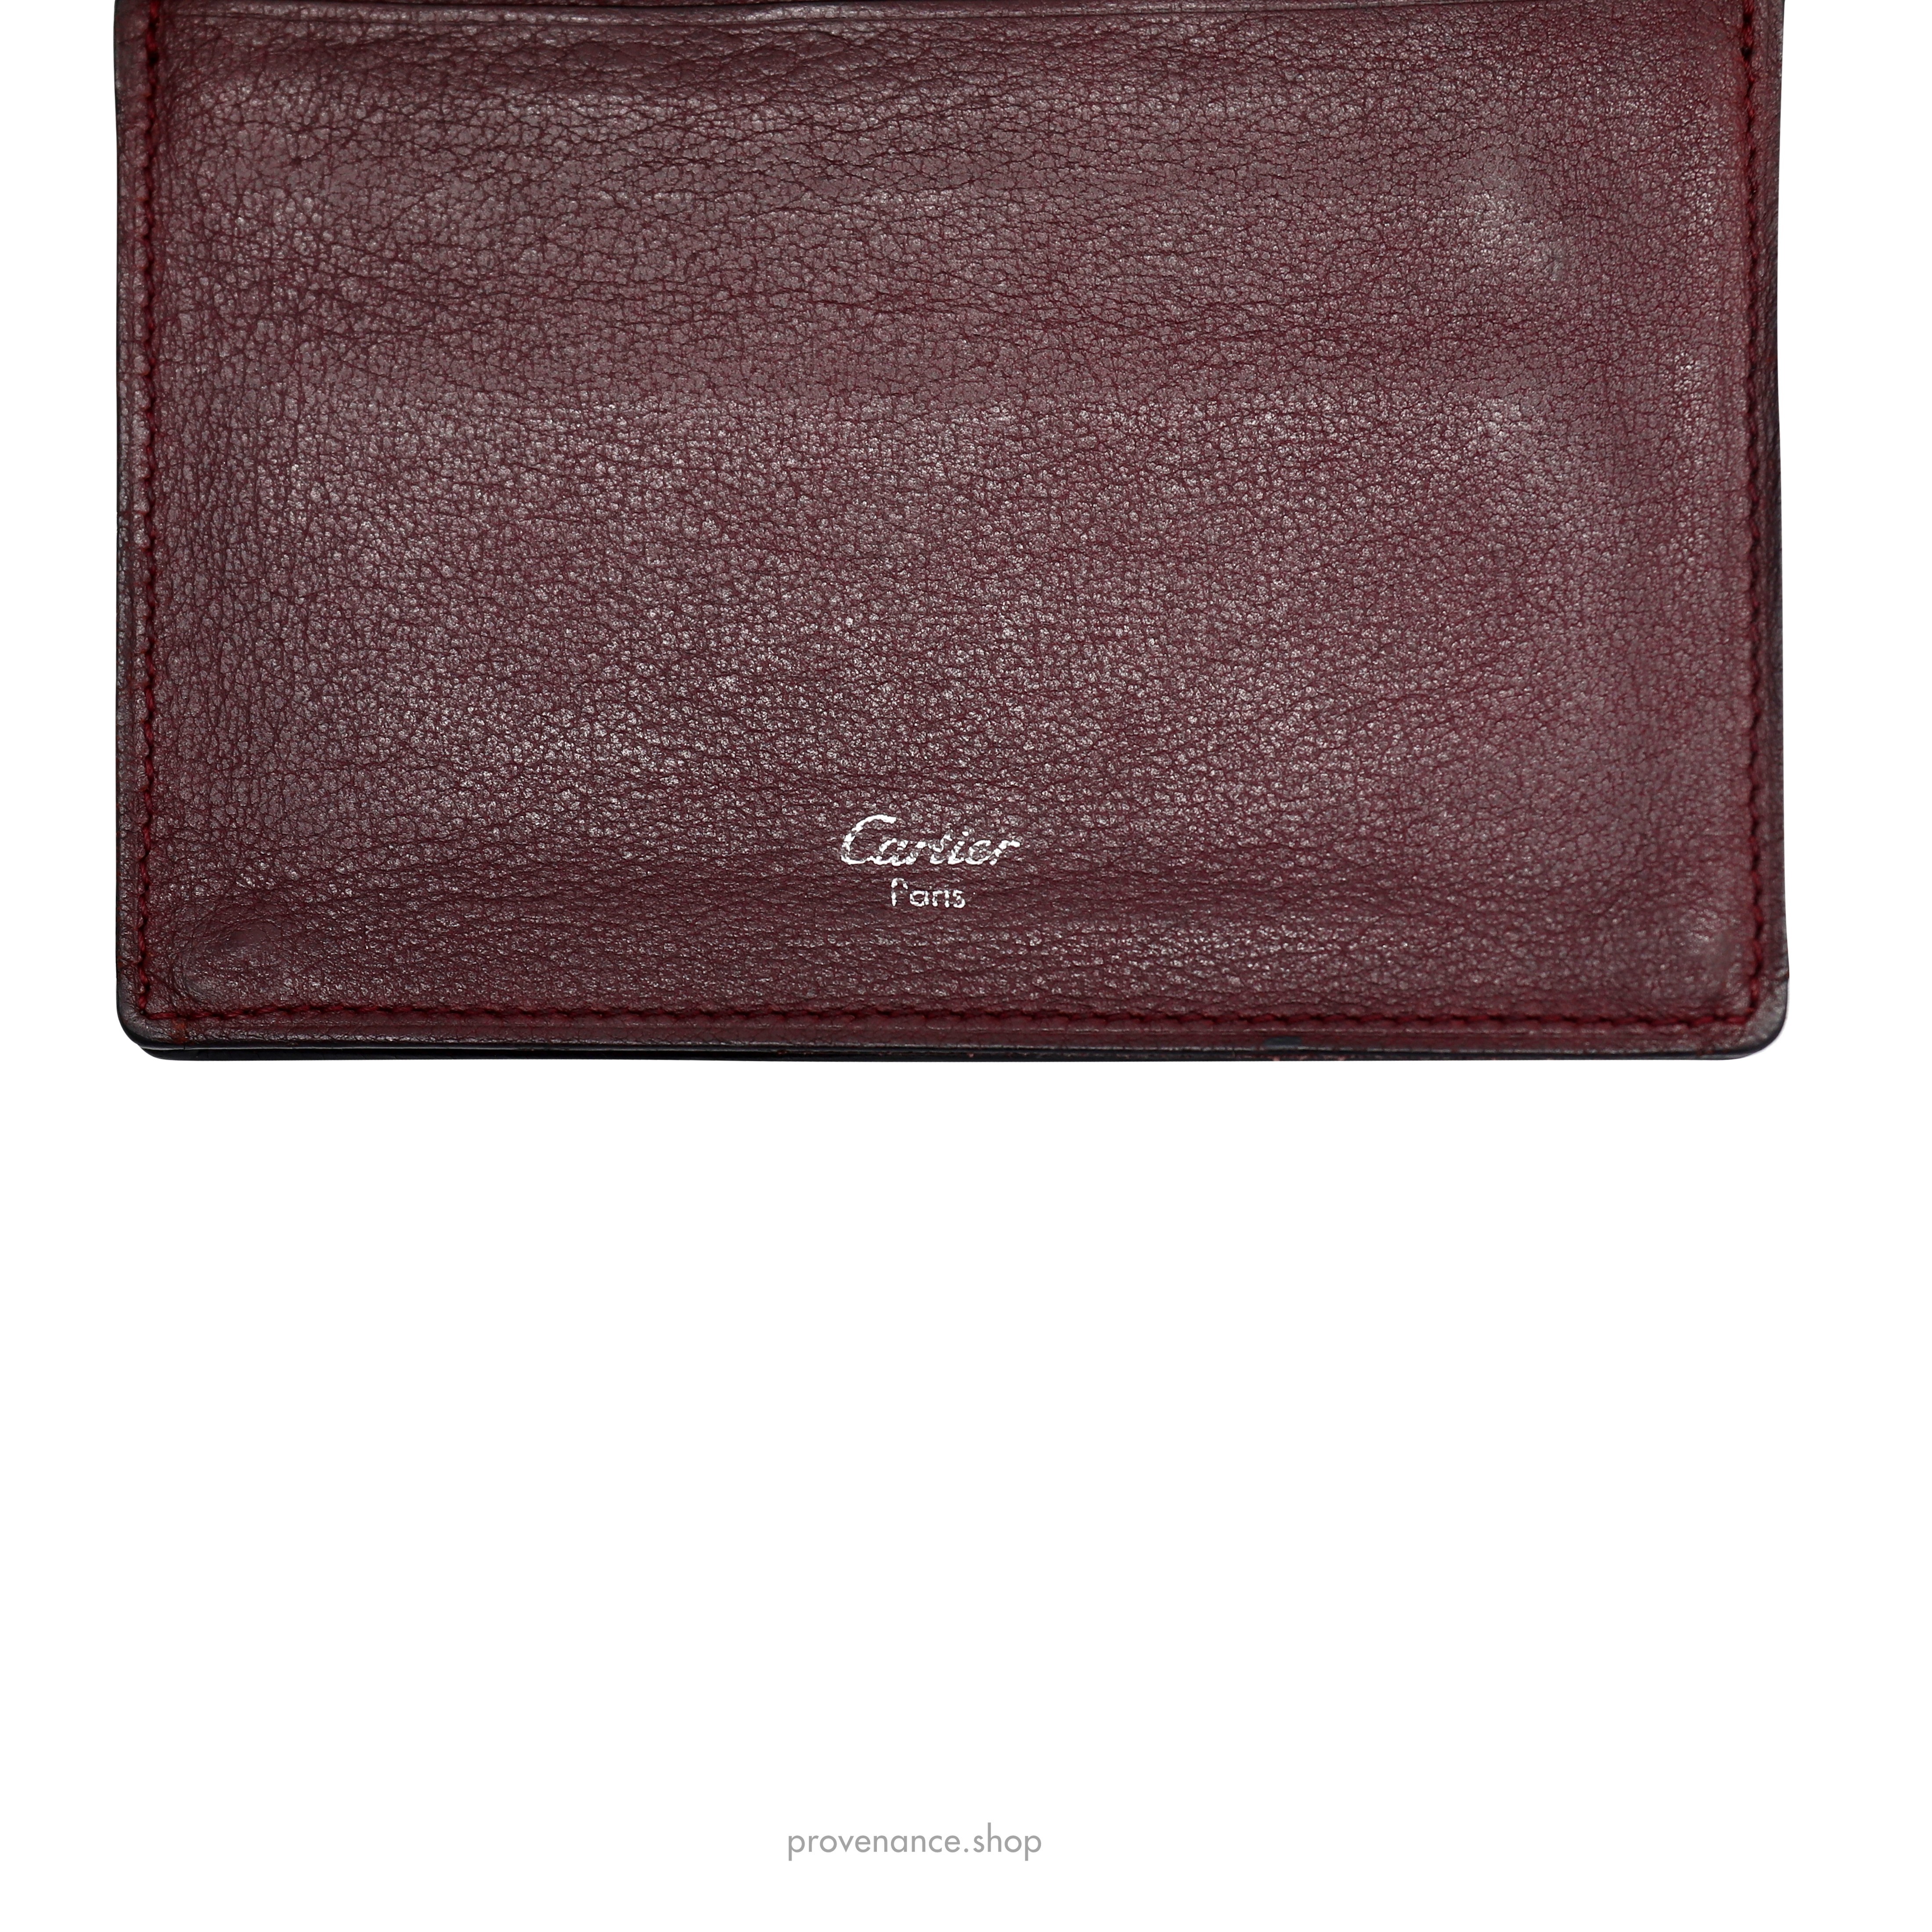 Pocket Organizer Wallet - Black & Burgundy Leather - 8